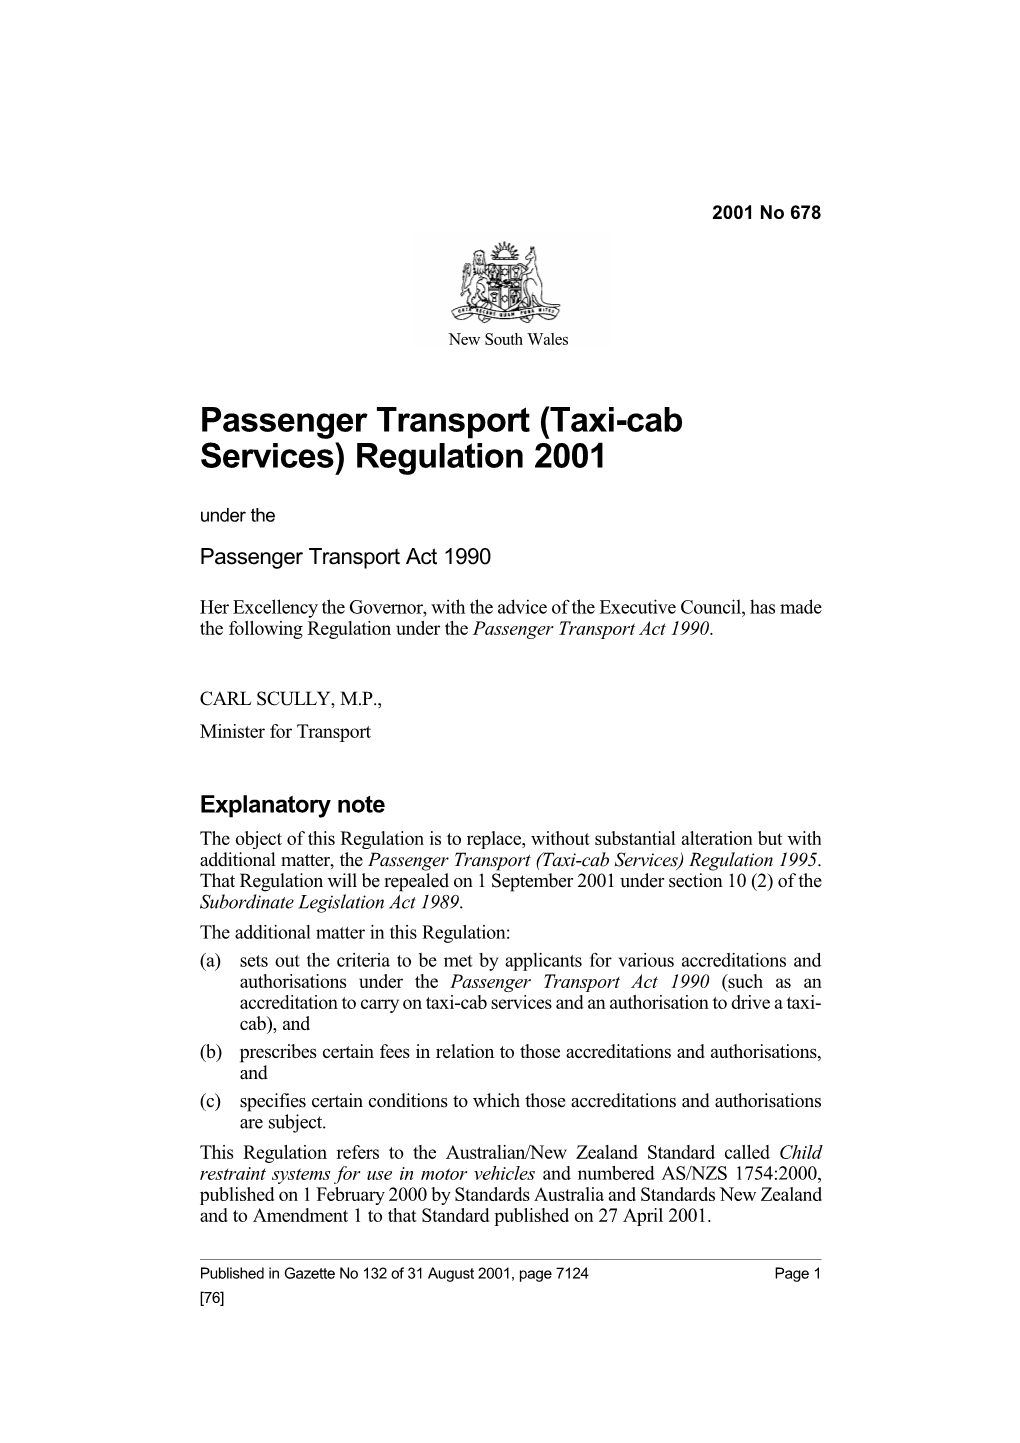 Passenger Transport (Taxi-Cab Services) Regulation 2001 Under the Passenger Transport Act 1990